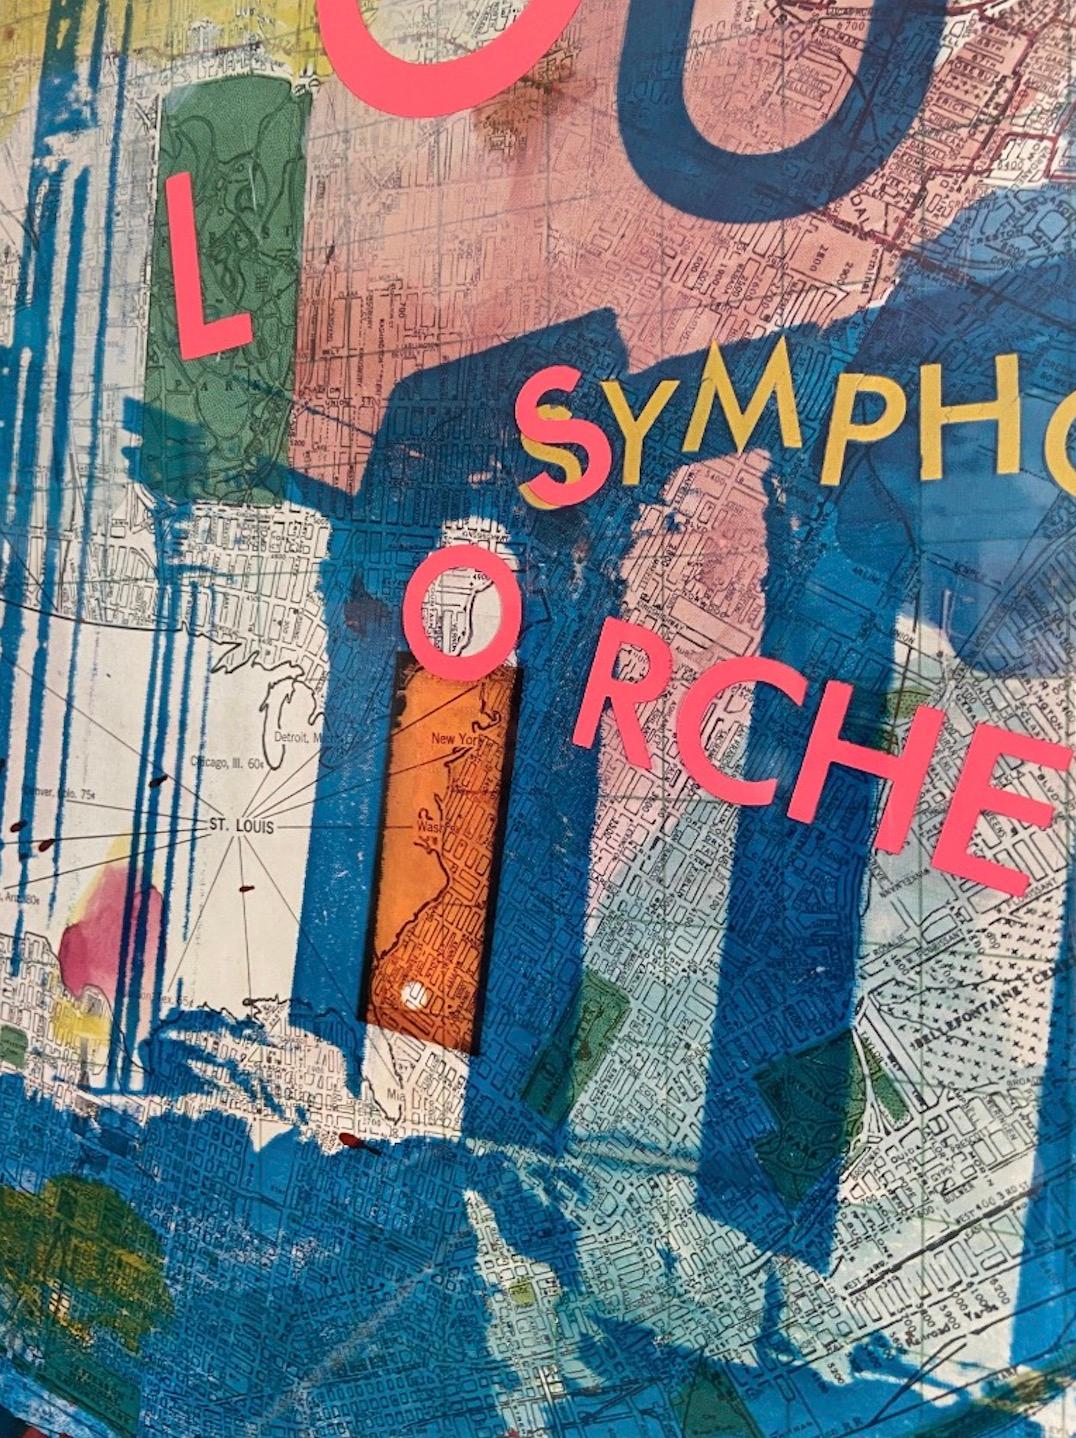 Paper Vintage Robert Rauschenberg Saint Louis Symphony Exhibition Poster, France, 1968 For Sale